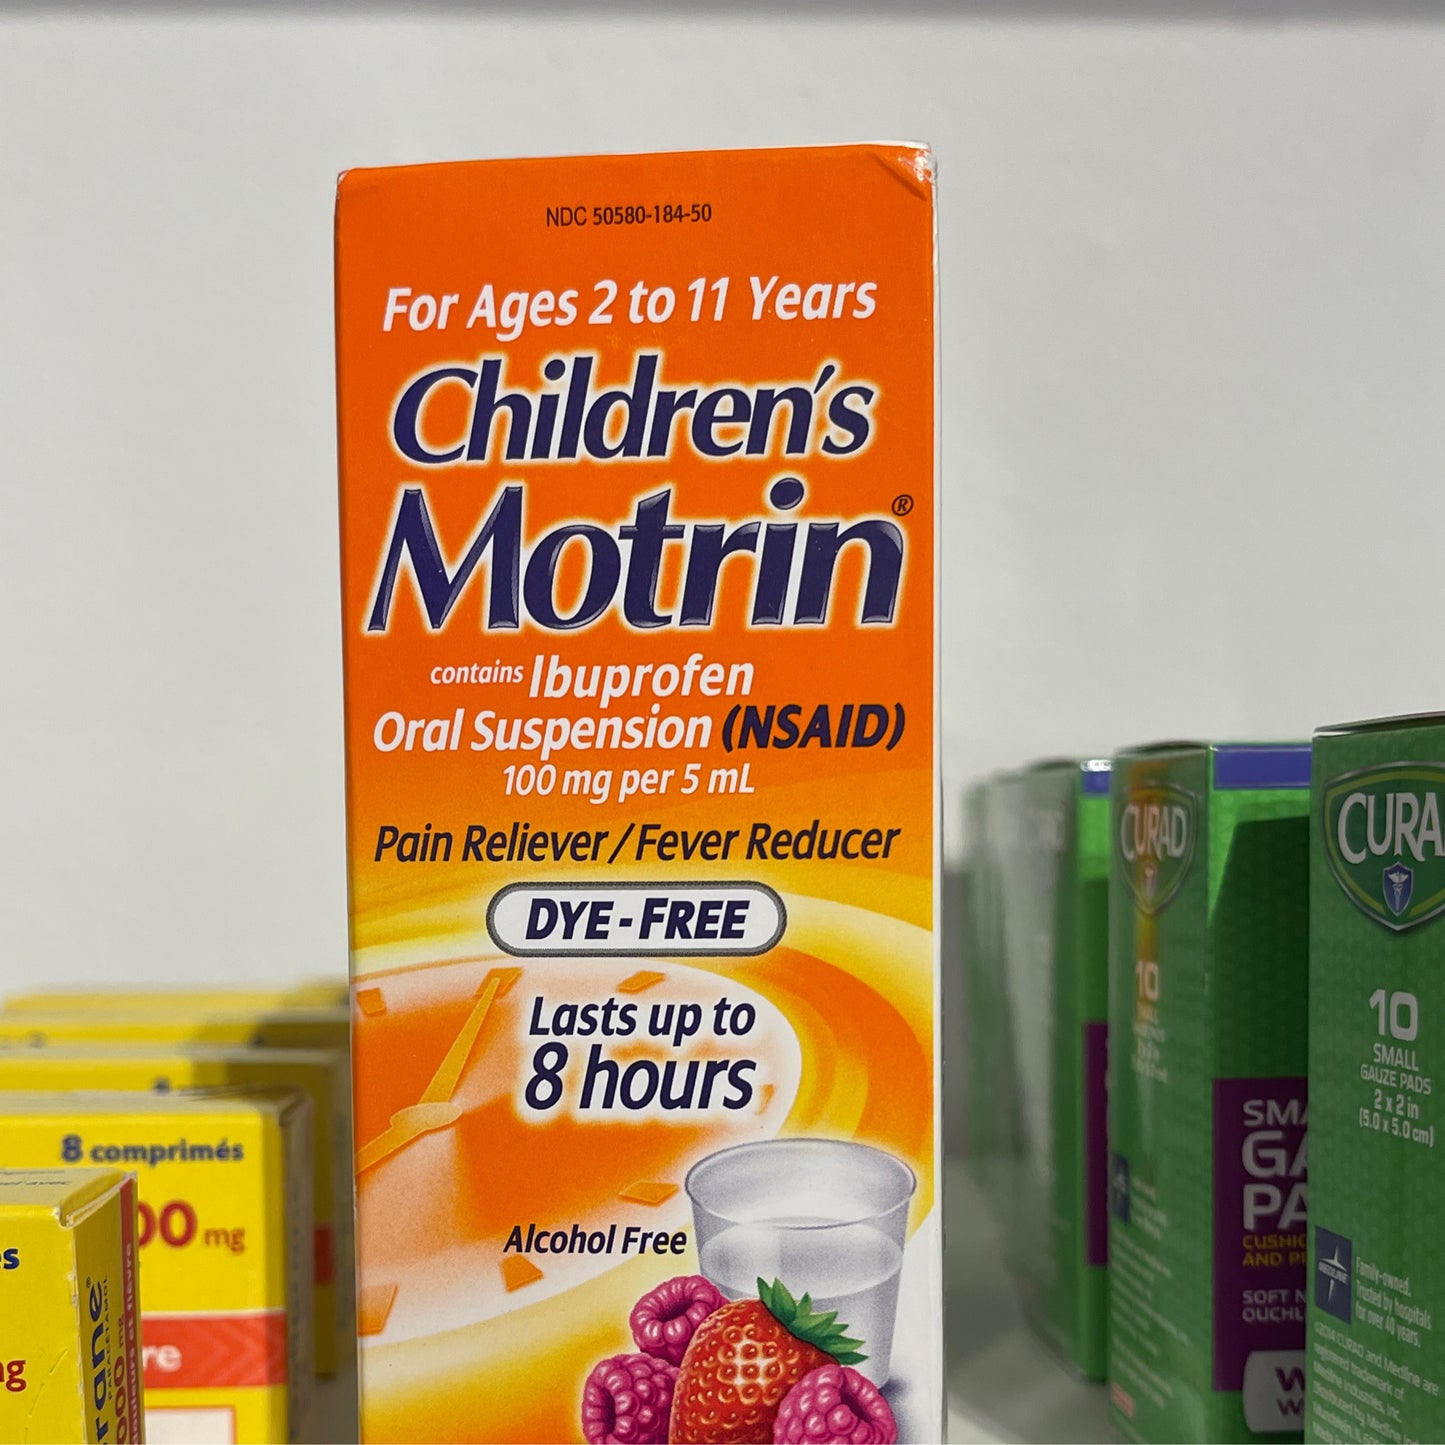 Motrin children’s100 mg per 5ml